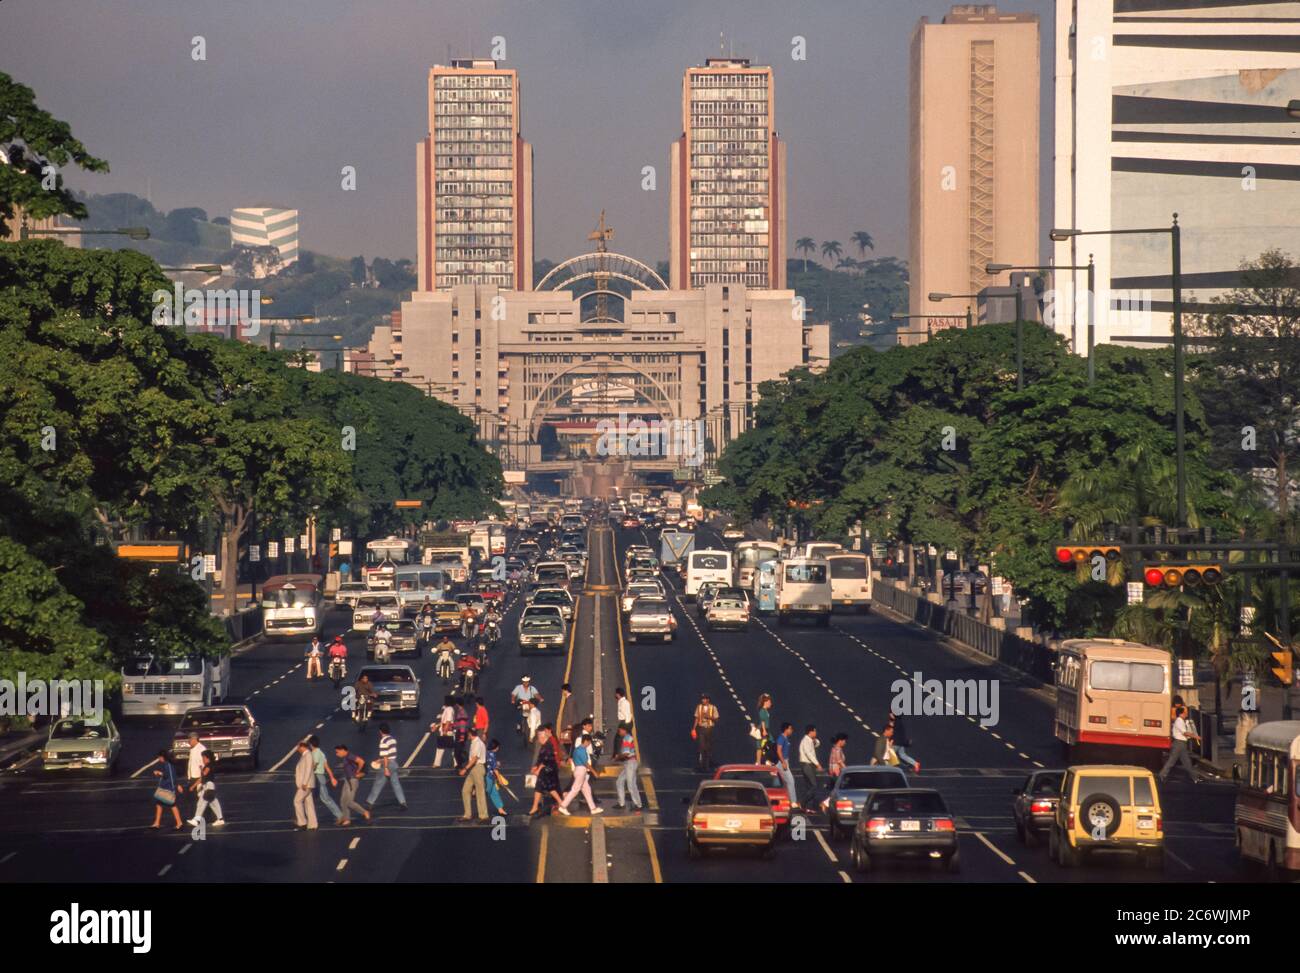 CARACAS, VENEZUELA - Traffic on Avenida Bolivar and twin towers of El Silencio at rear. Stock Photo